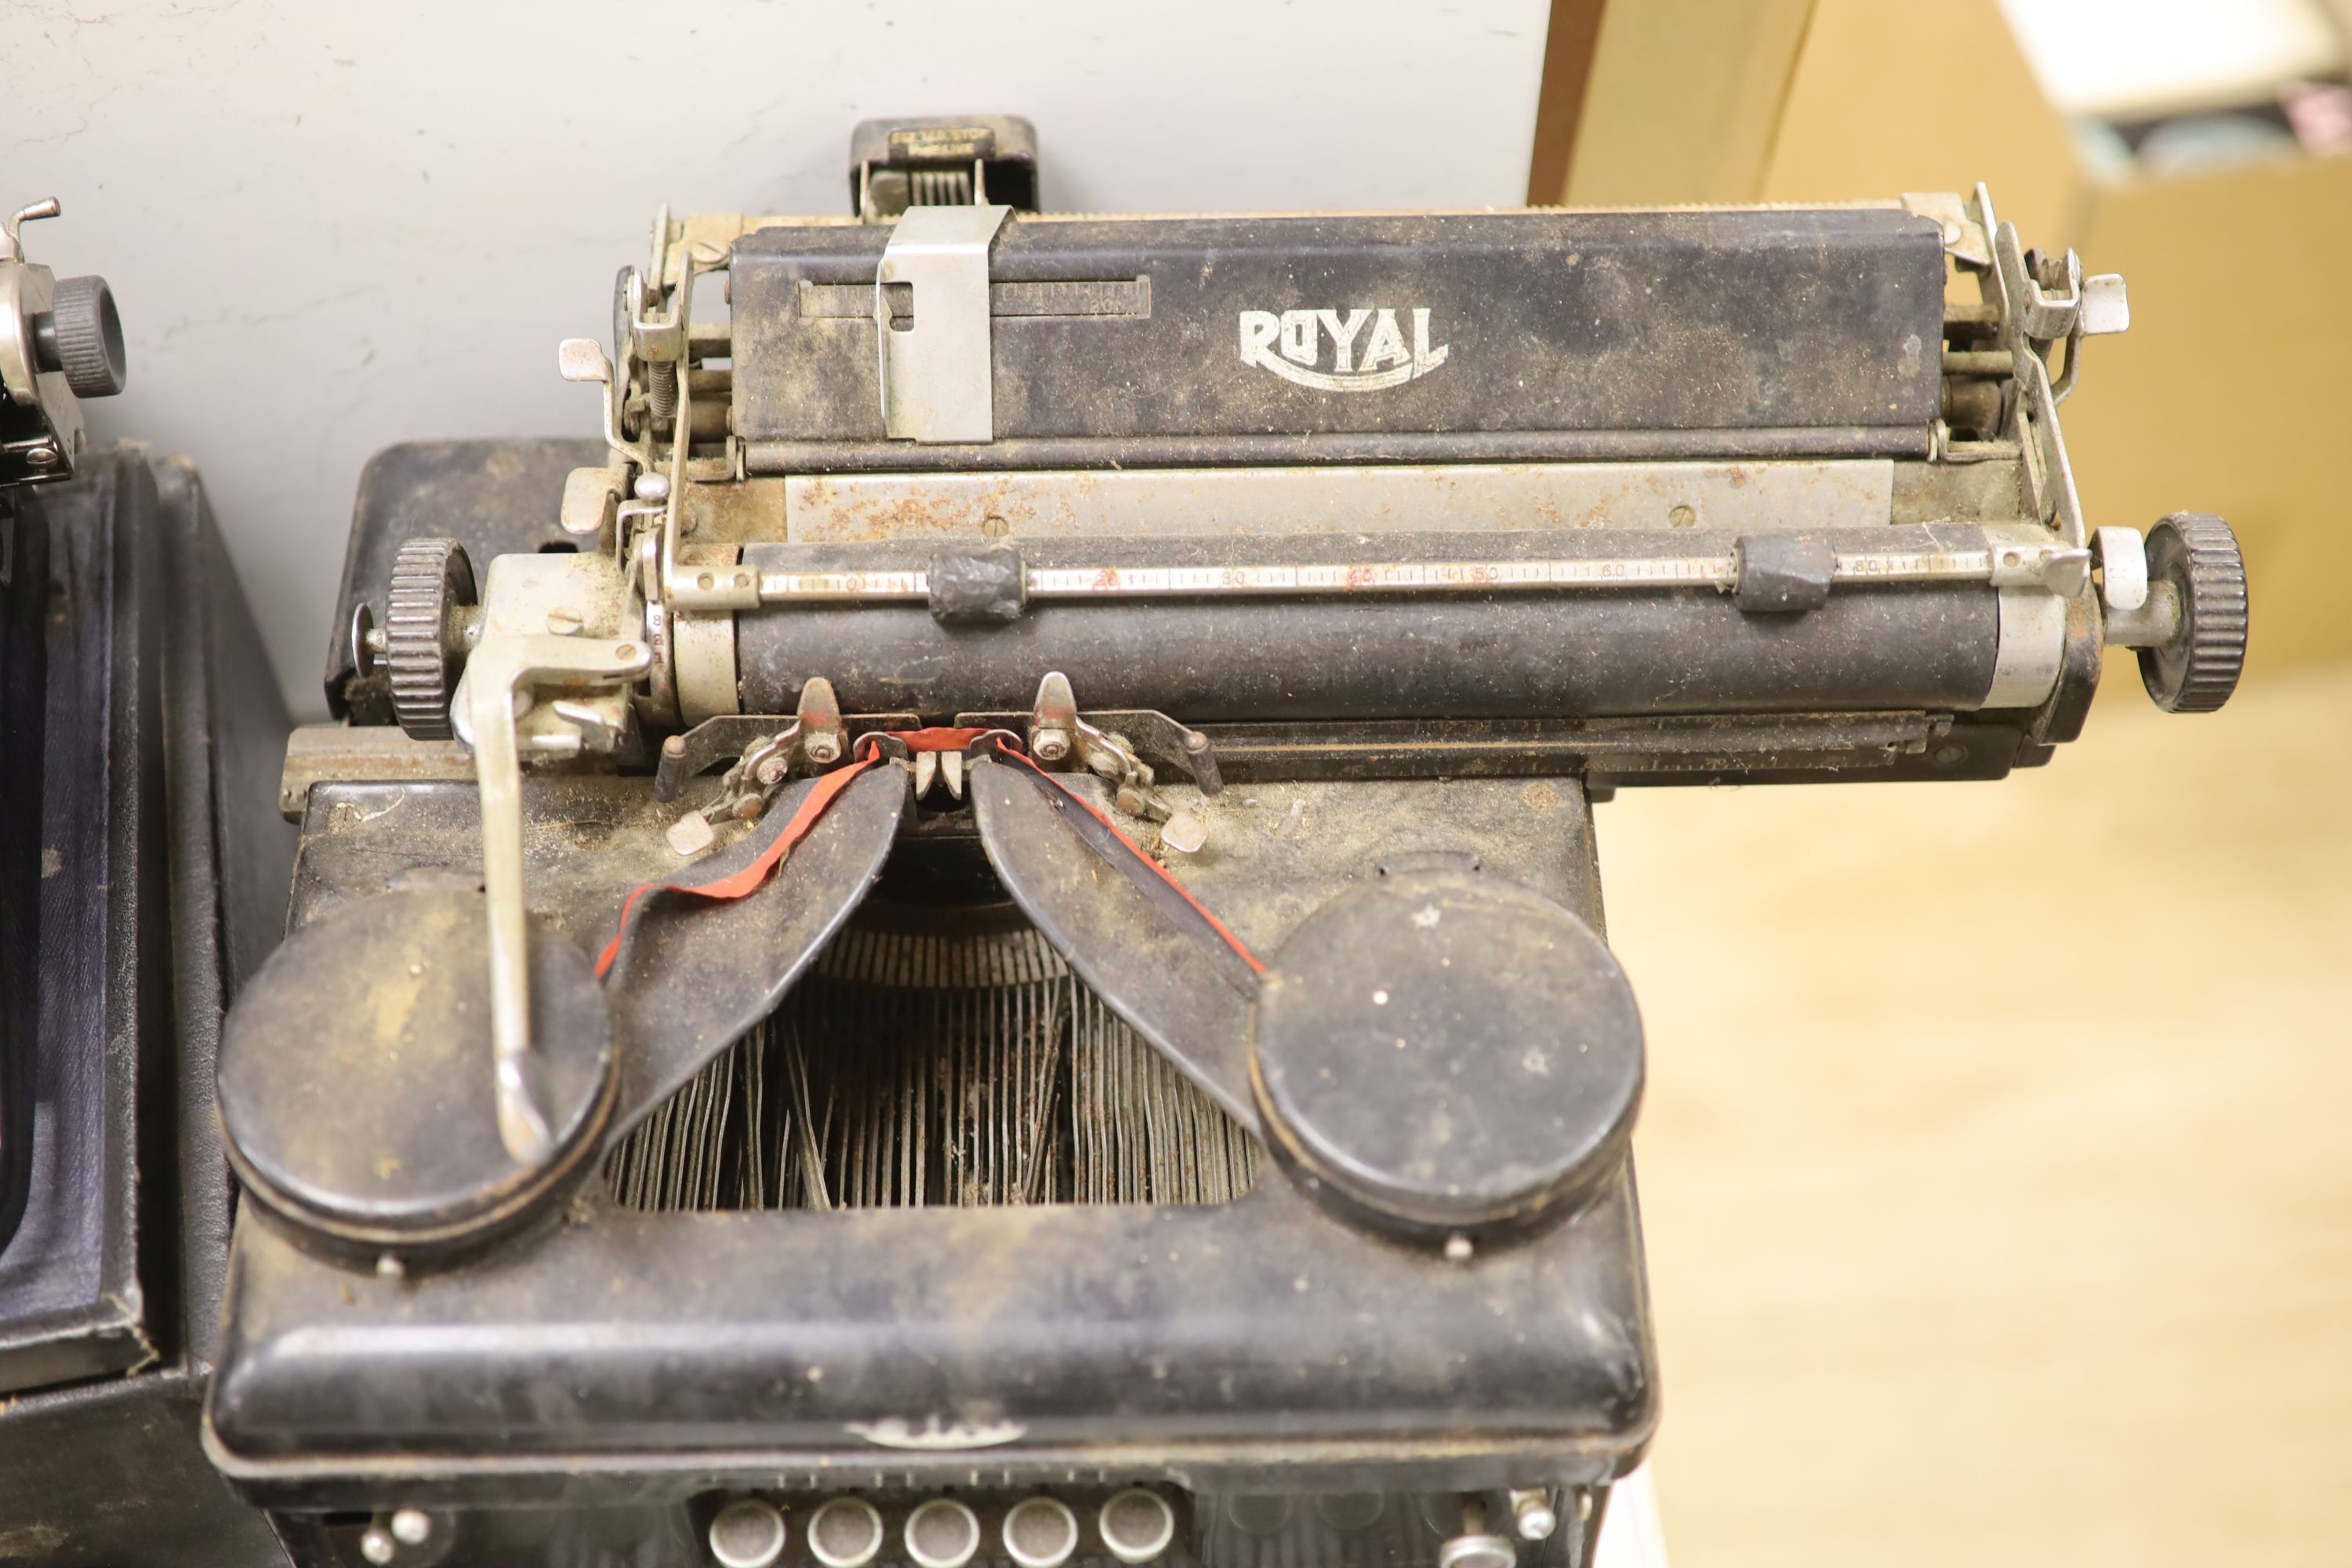 Three vintage typewriters: Underwood Standard portable, Remington Portable and Royal Typewriter Company